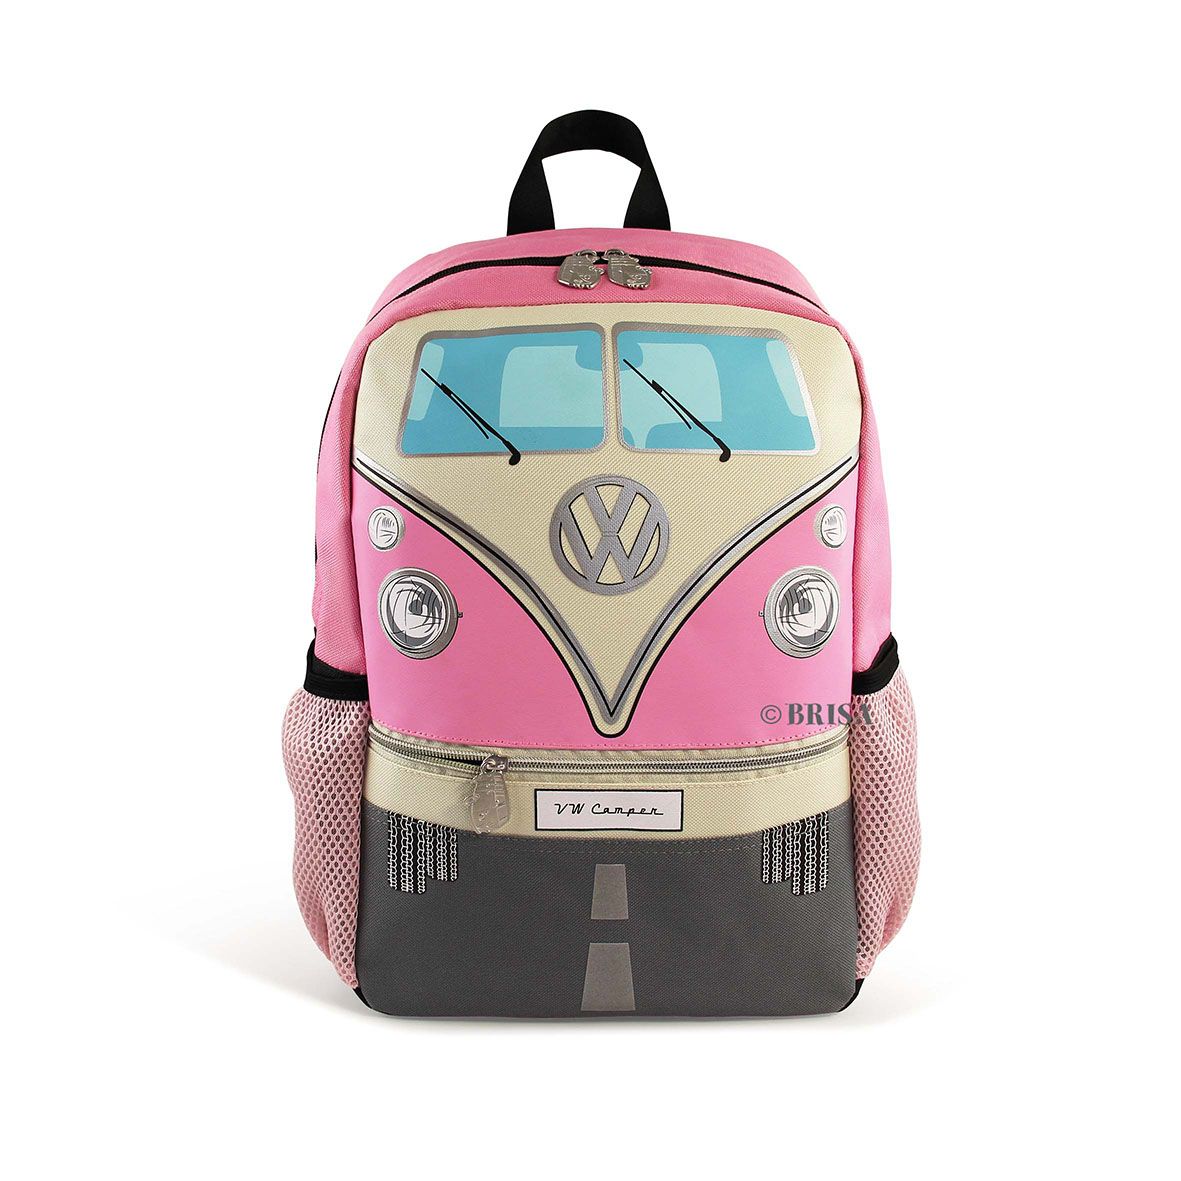 Petit sac à dos T1 Combi Volkswagen